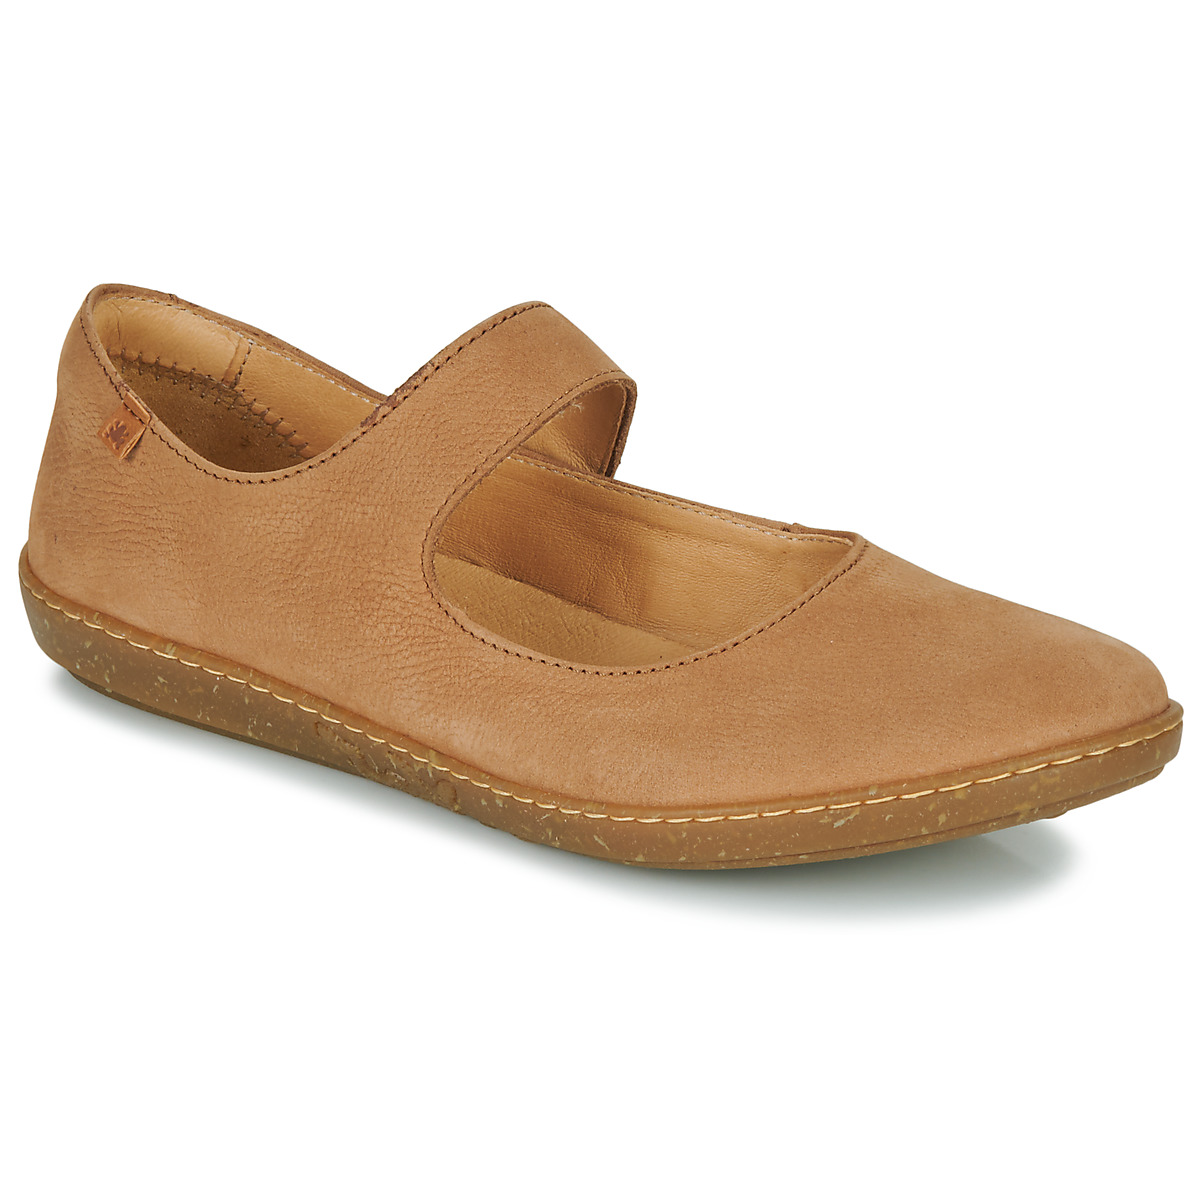 el naturalista  coral  women's shoes (pumps / ballerinas) in brown